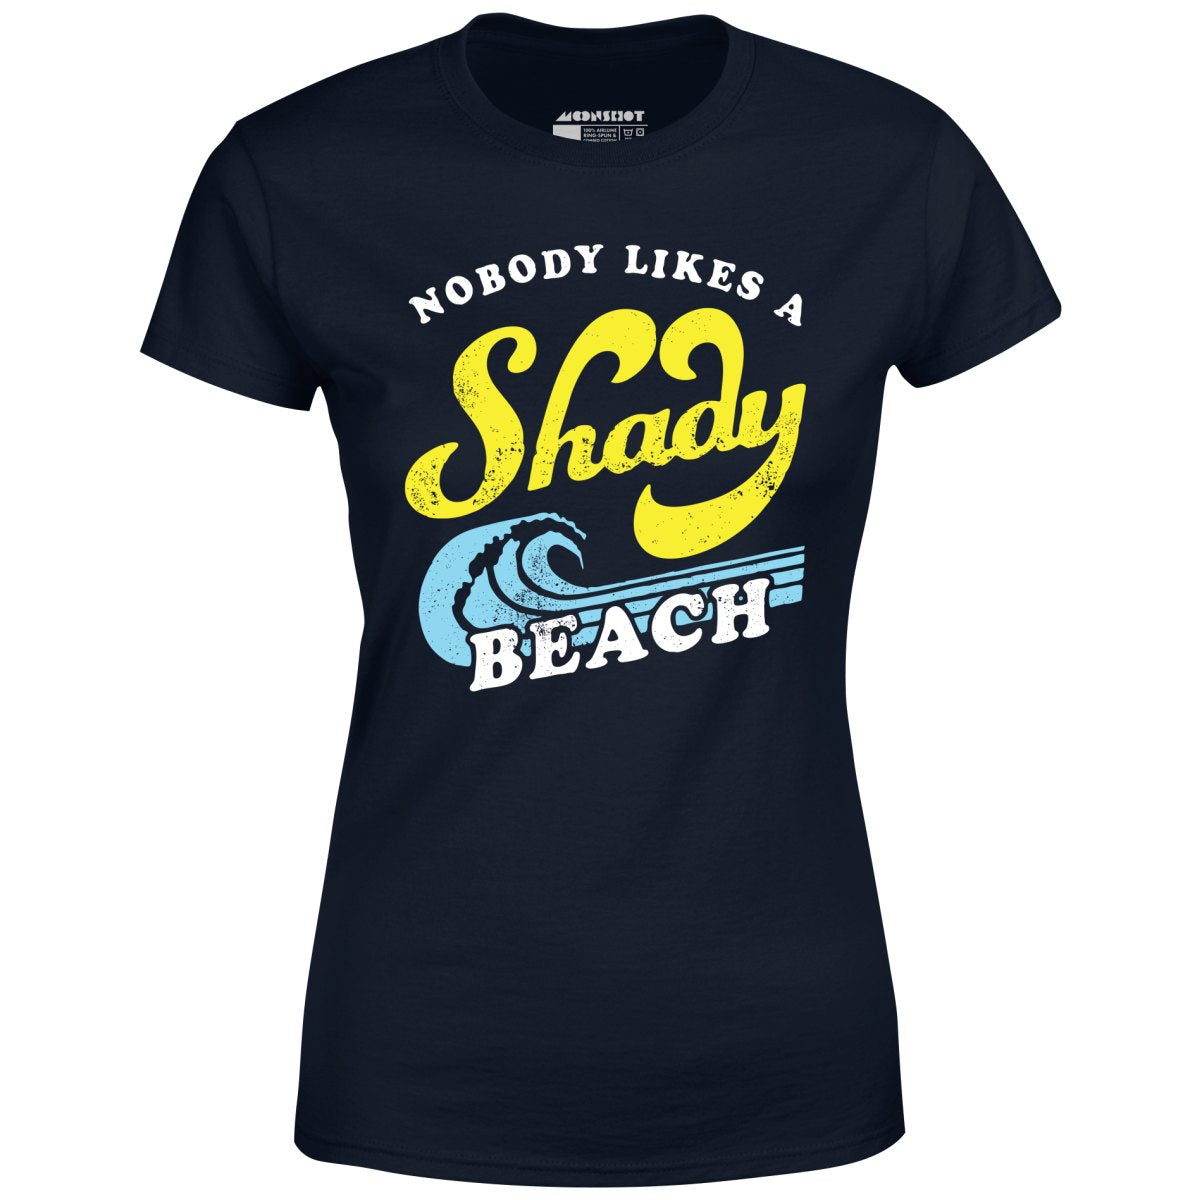 Nobody Likes a Shady Beach - Women's T-Shirt